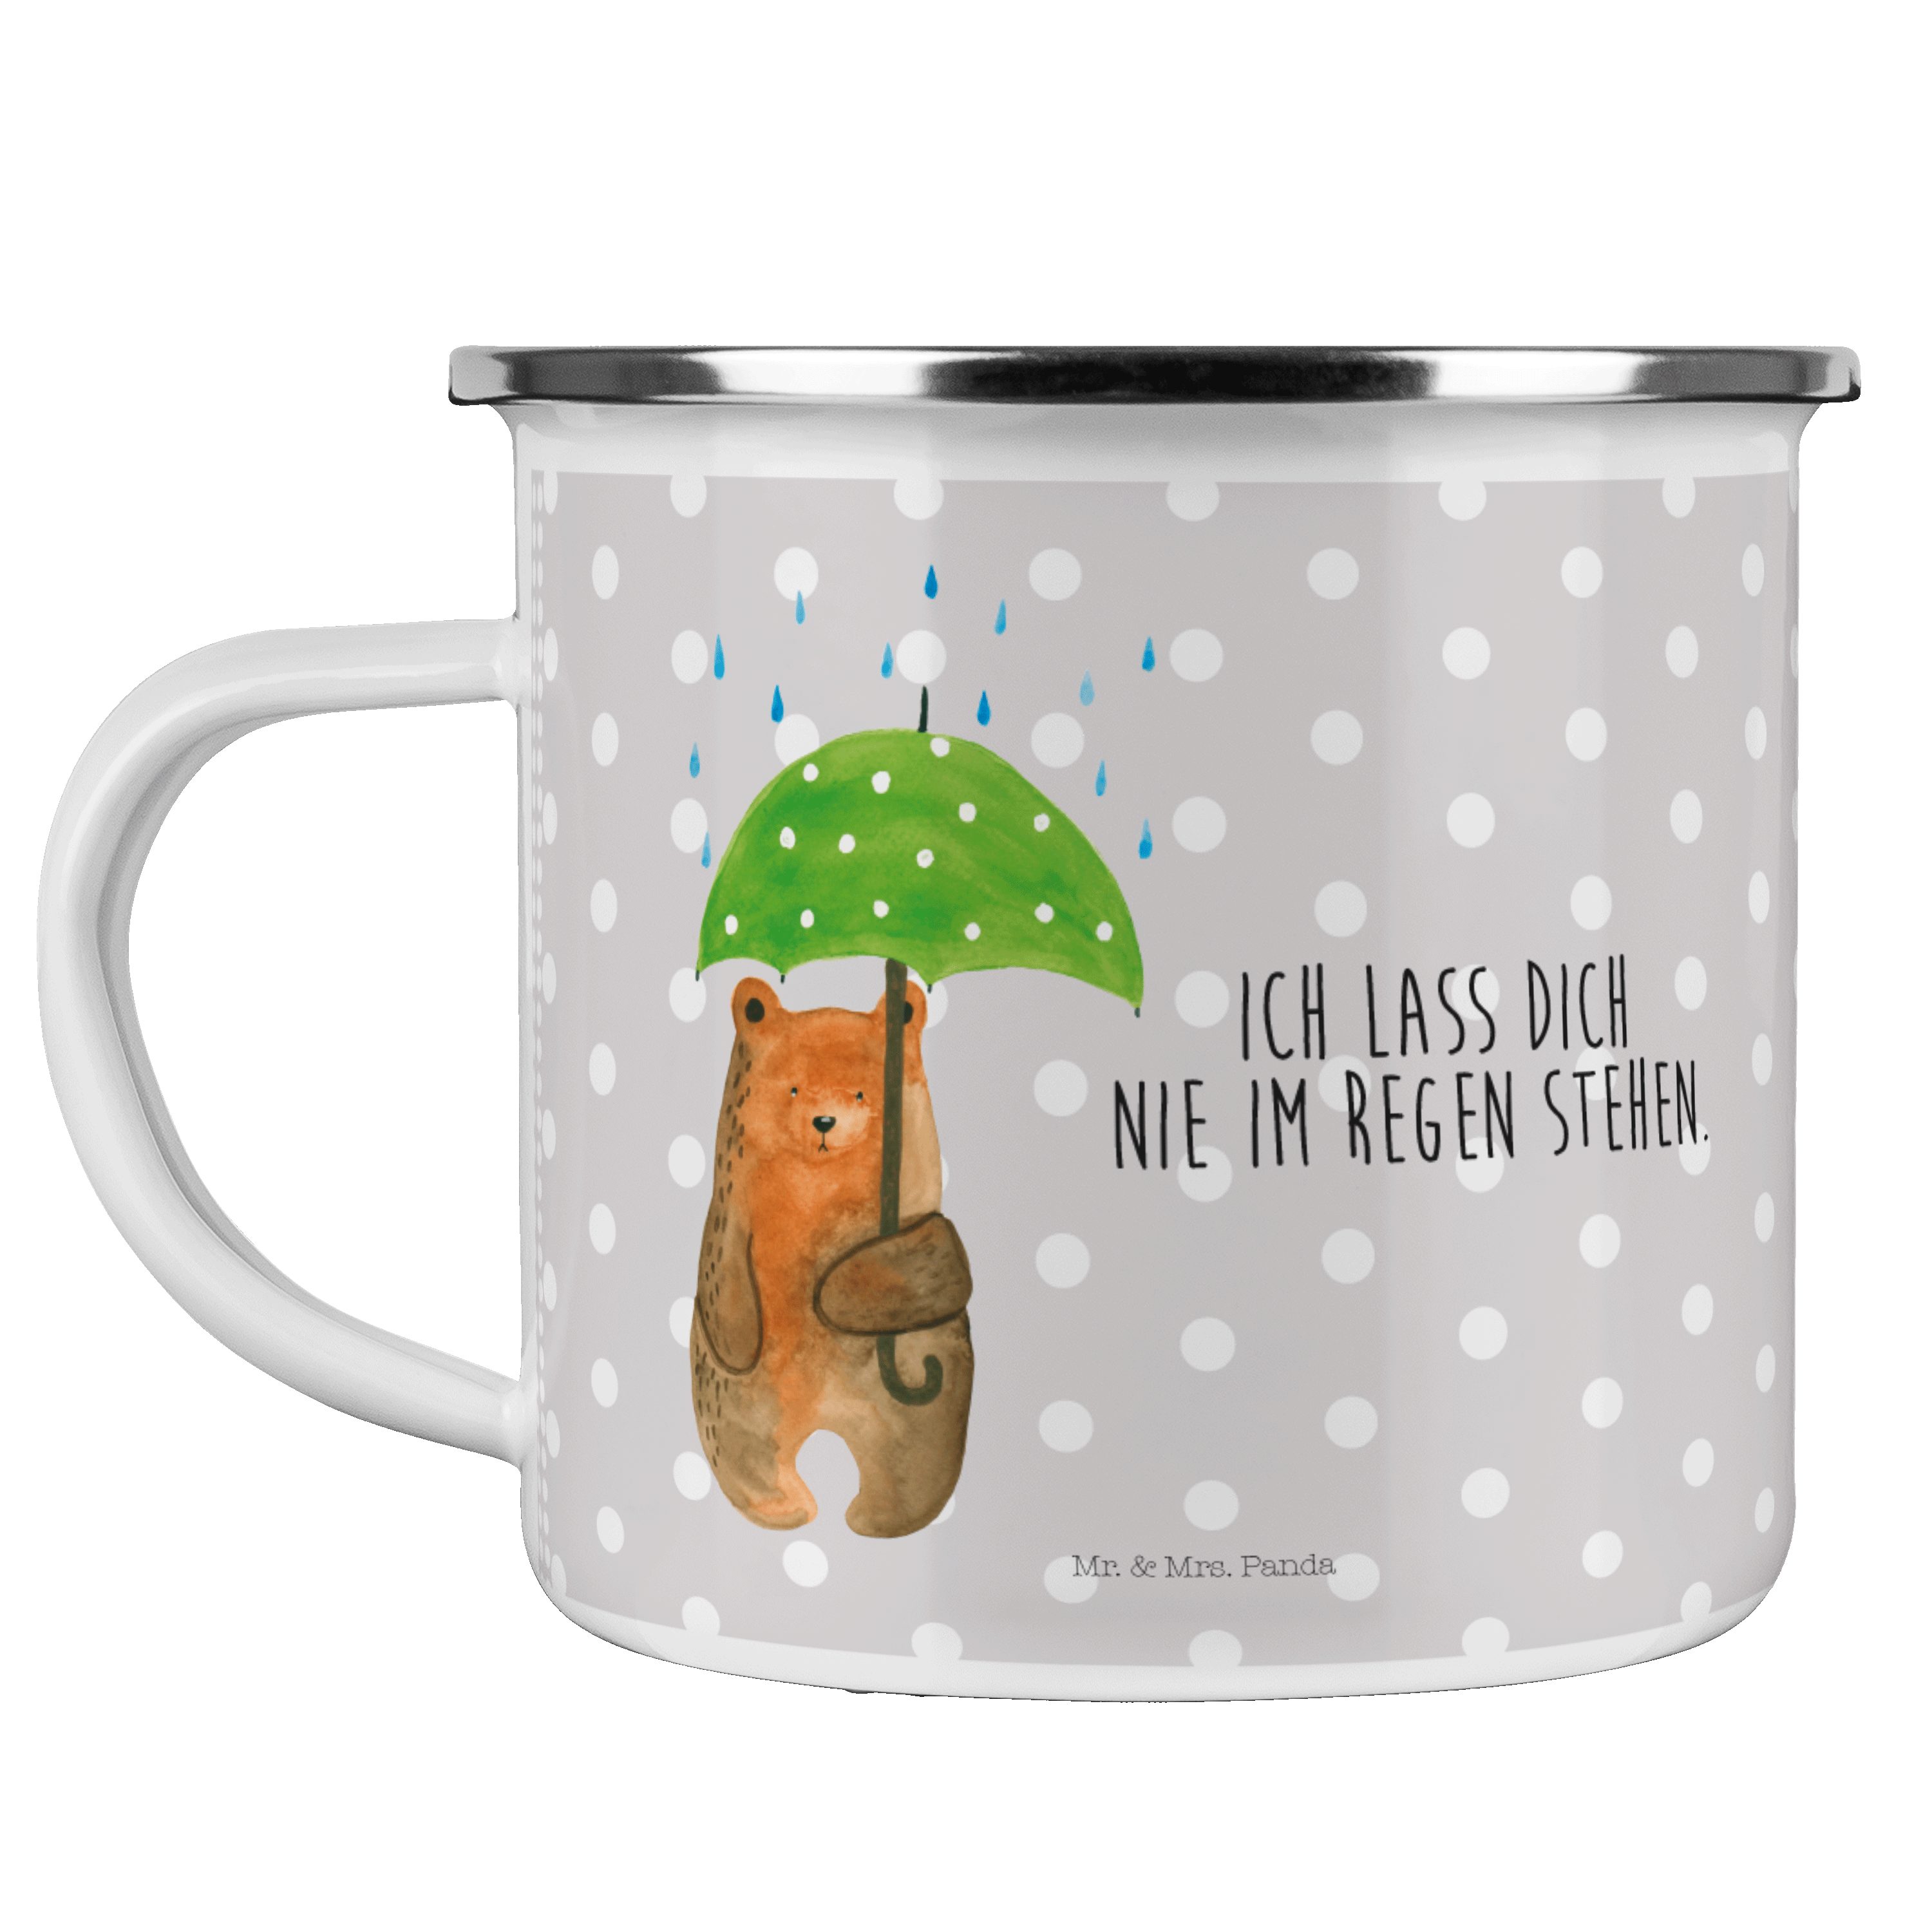 Mr. & Mrs. Panda Becher Bär mit Regenschirm - Grau Pastell - Geschenk, Teddybär, Pärchen, Fre, Emaille